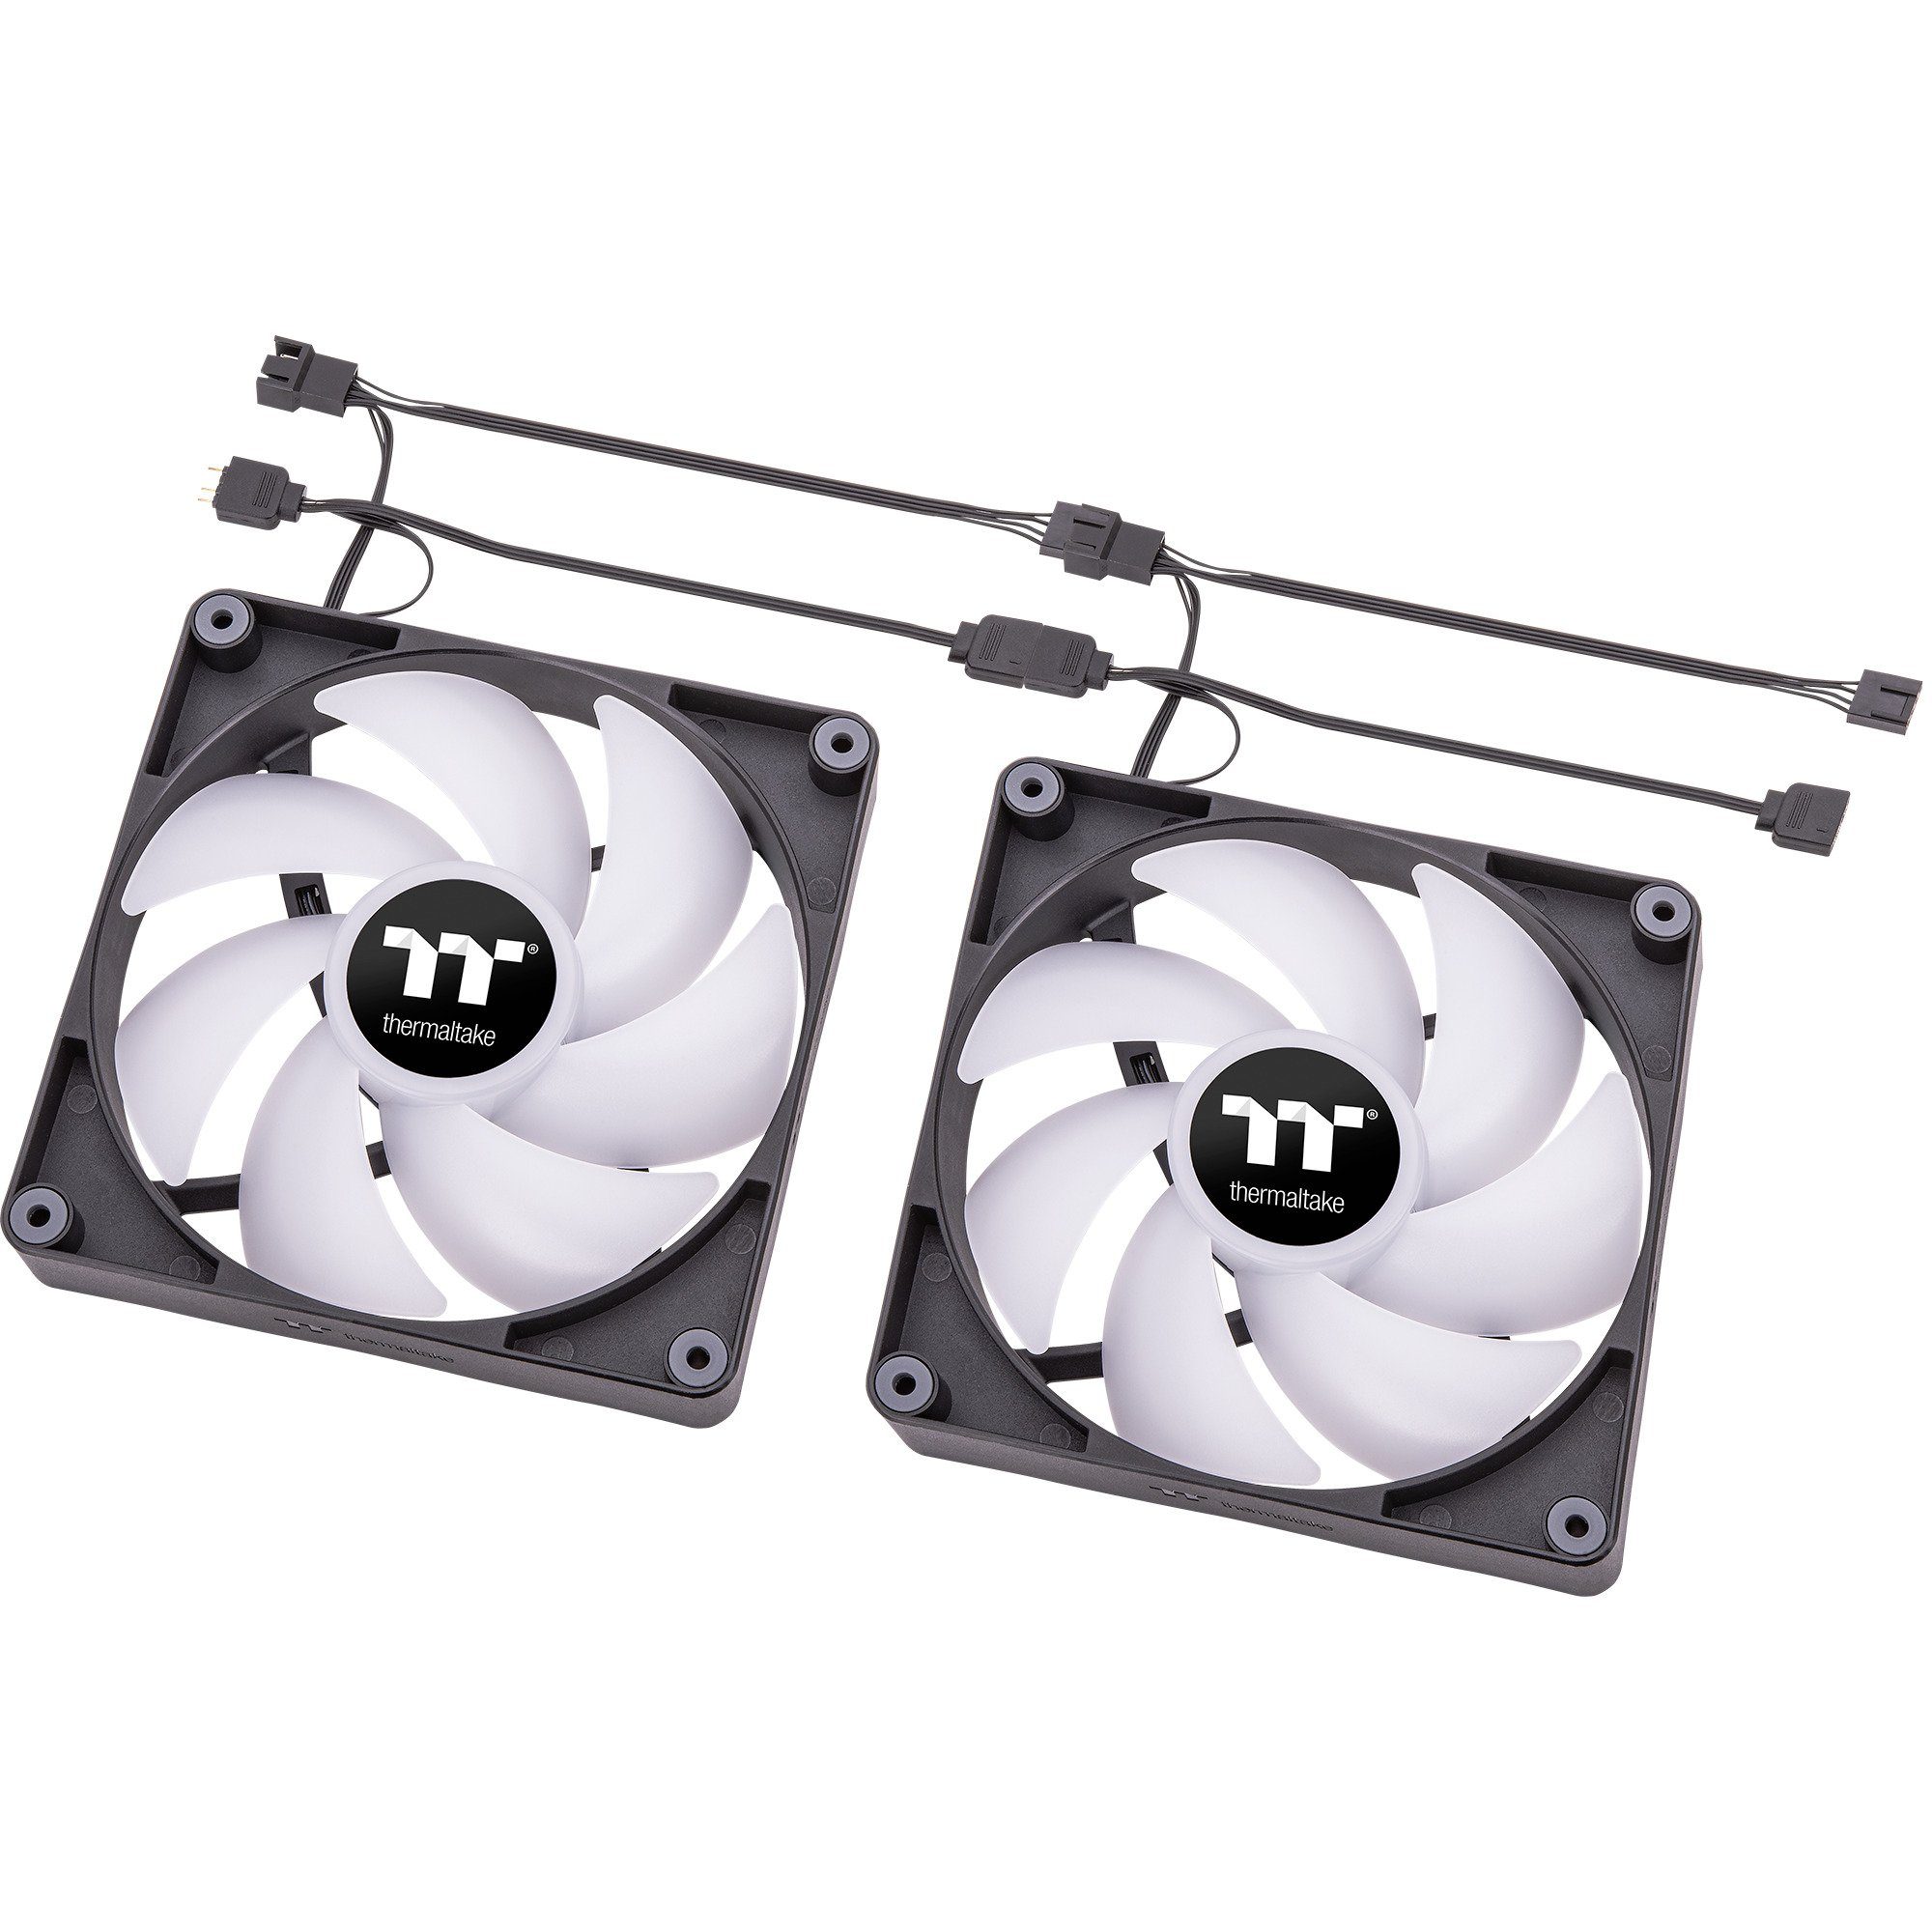 Thermaltake Gehäuselüfter CT120 ARGB Sync PC Cooling Fan